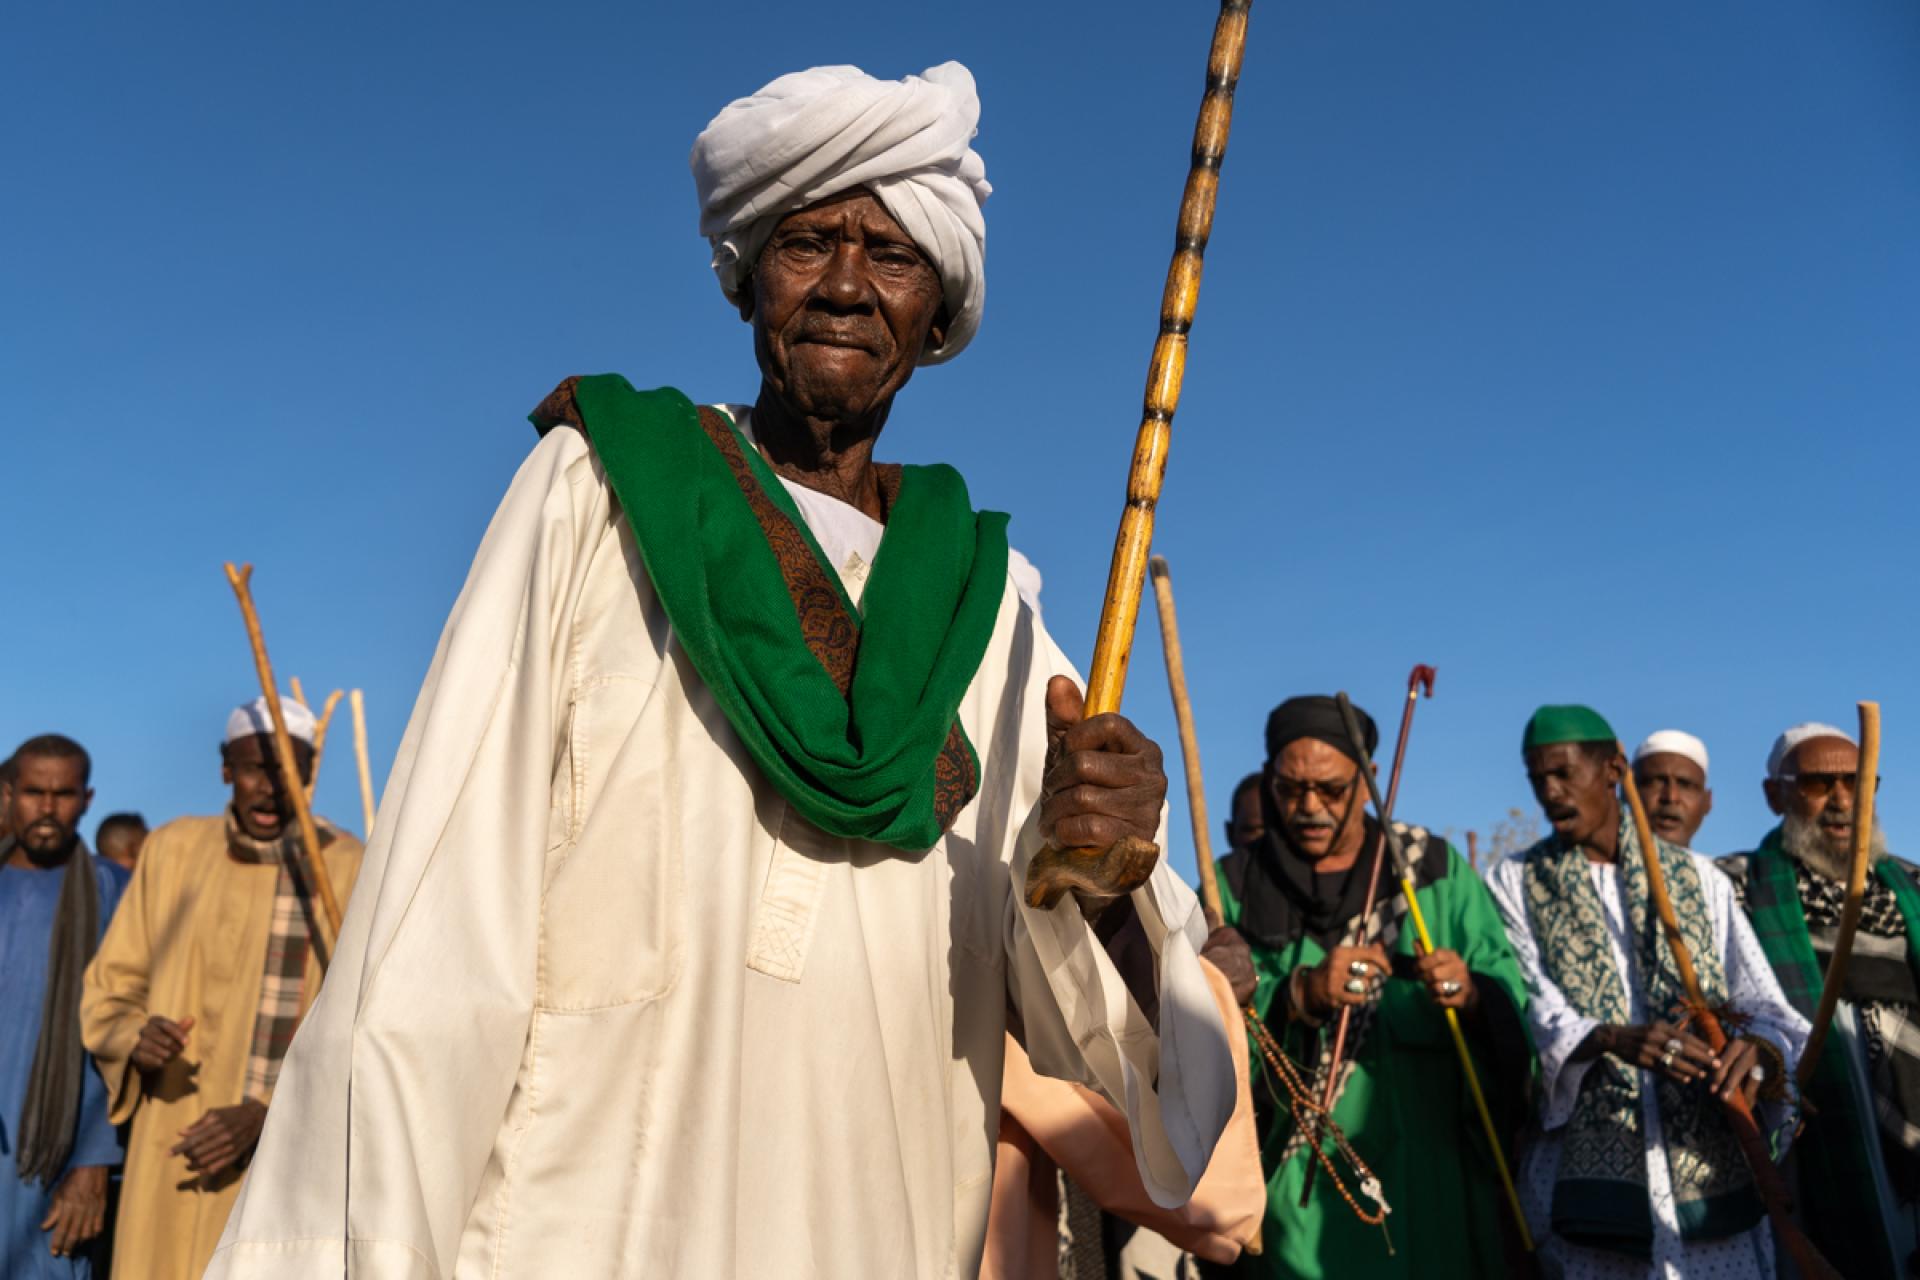 London Photography Awards Winner - Sudan's whirling dervishes